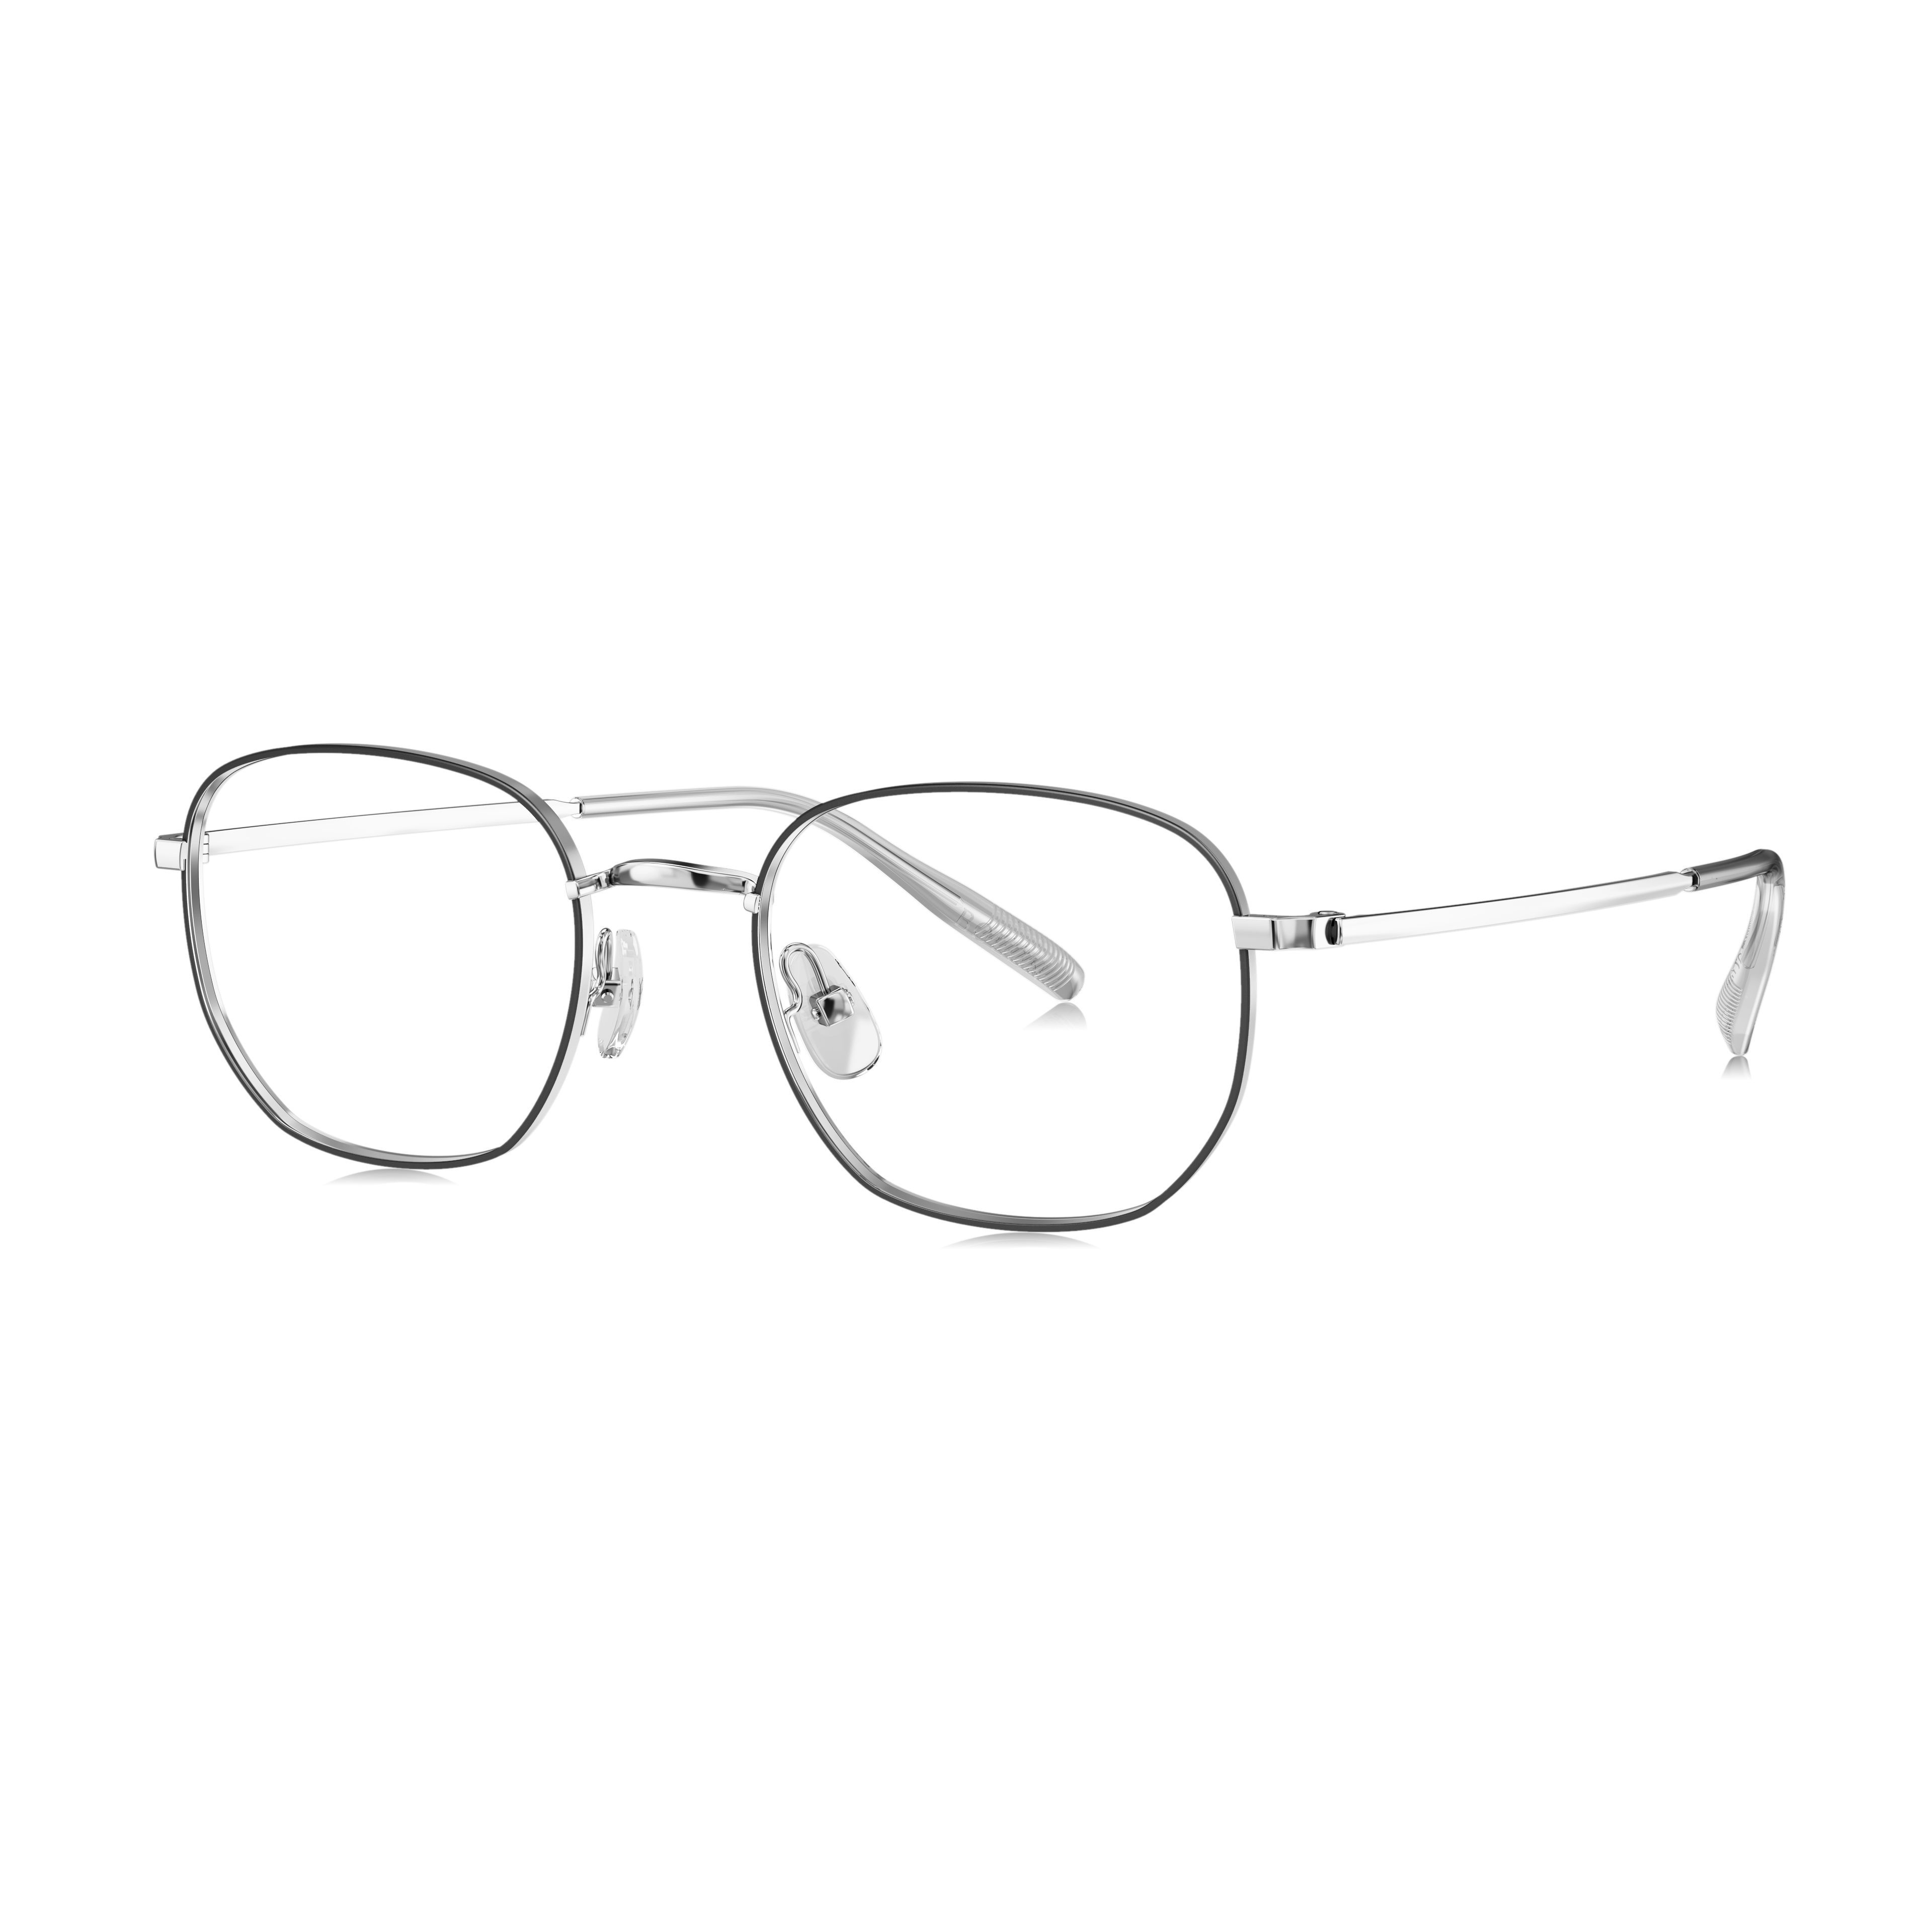 BJ7215 Oval Eyeglasses B15 - size  52